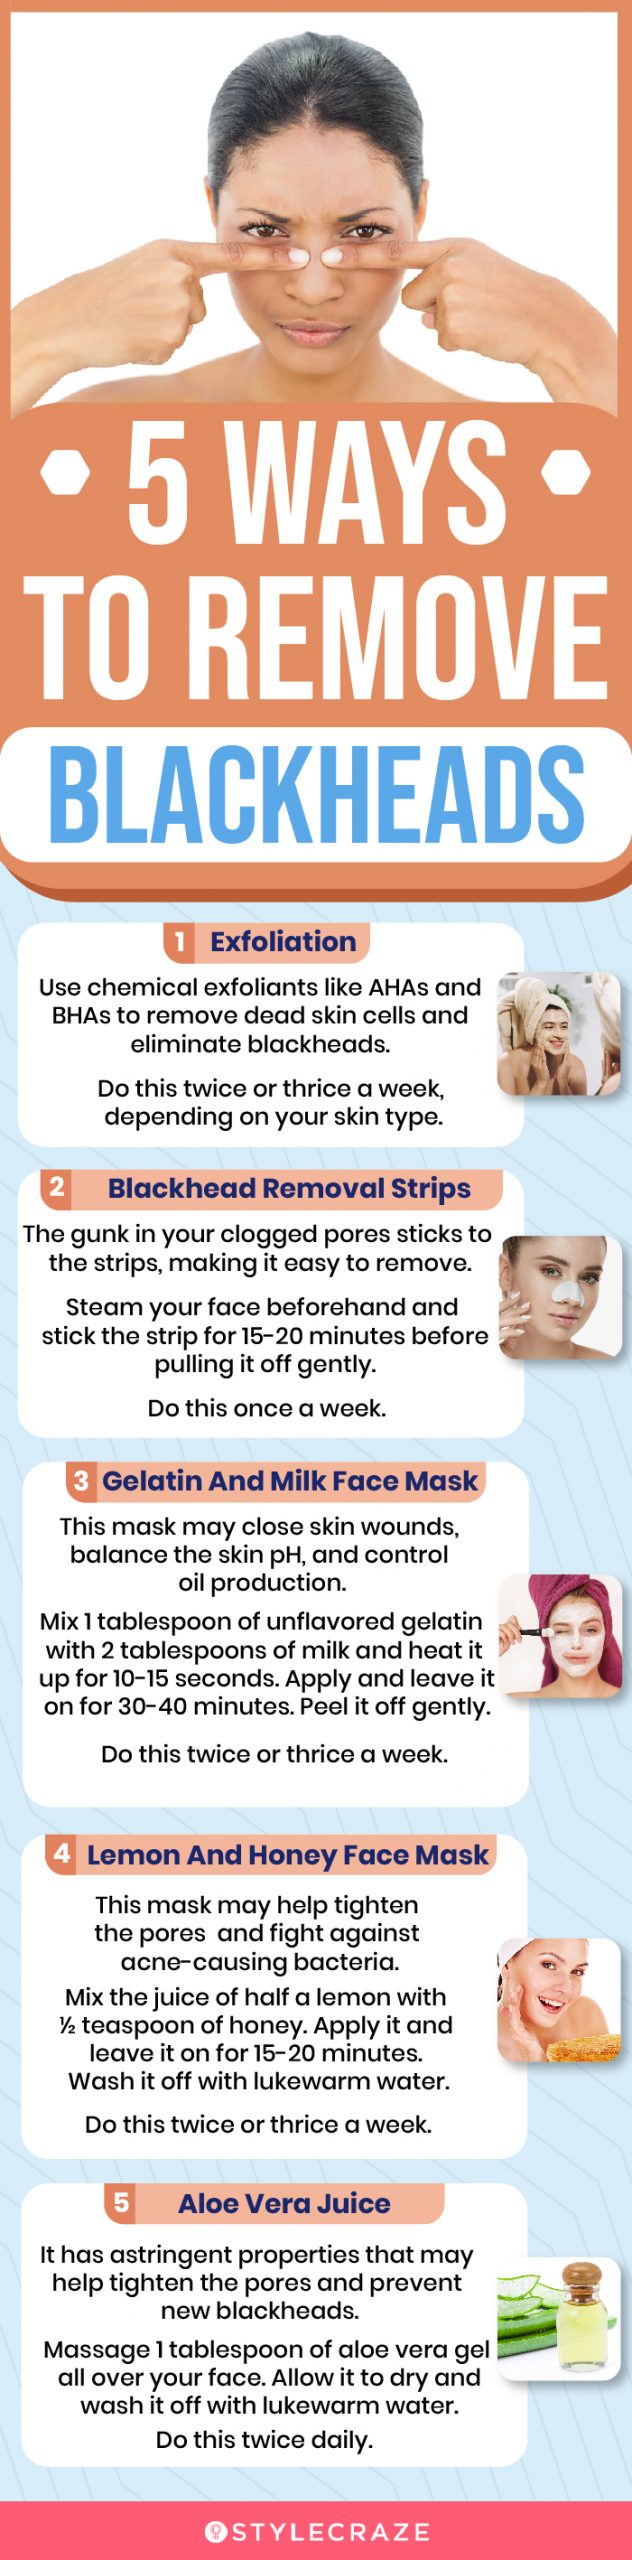 5 ways to remove blackheads(infographic)